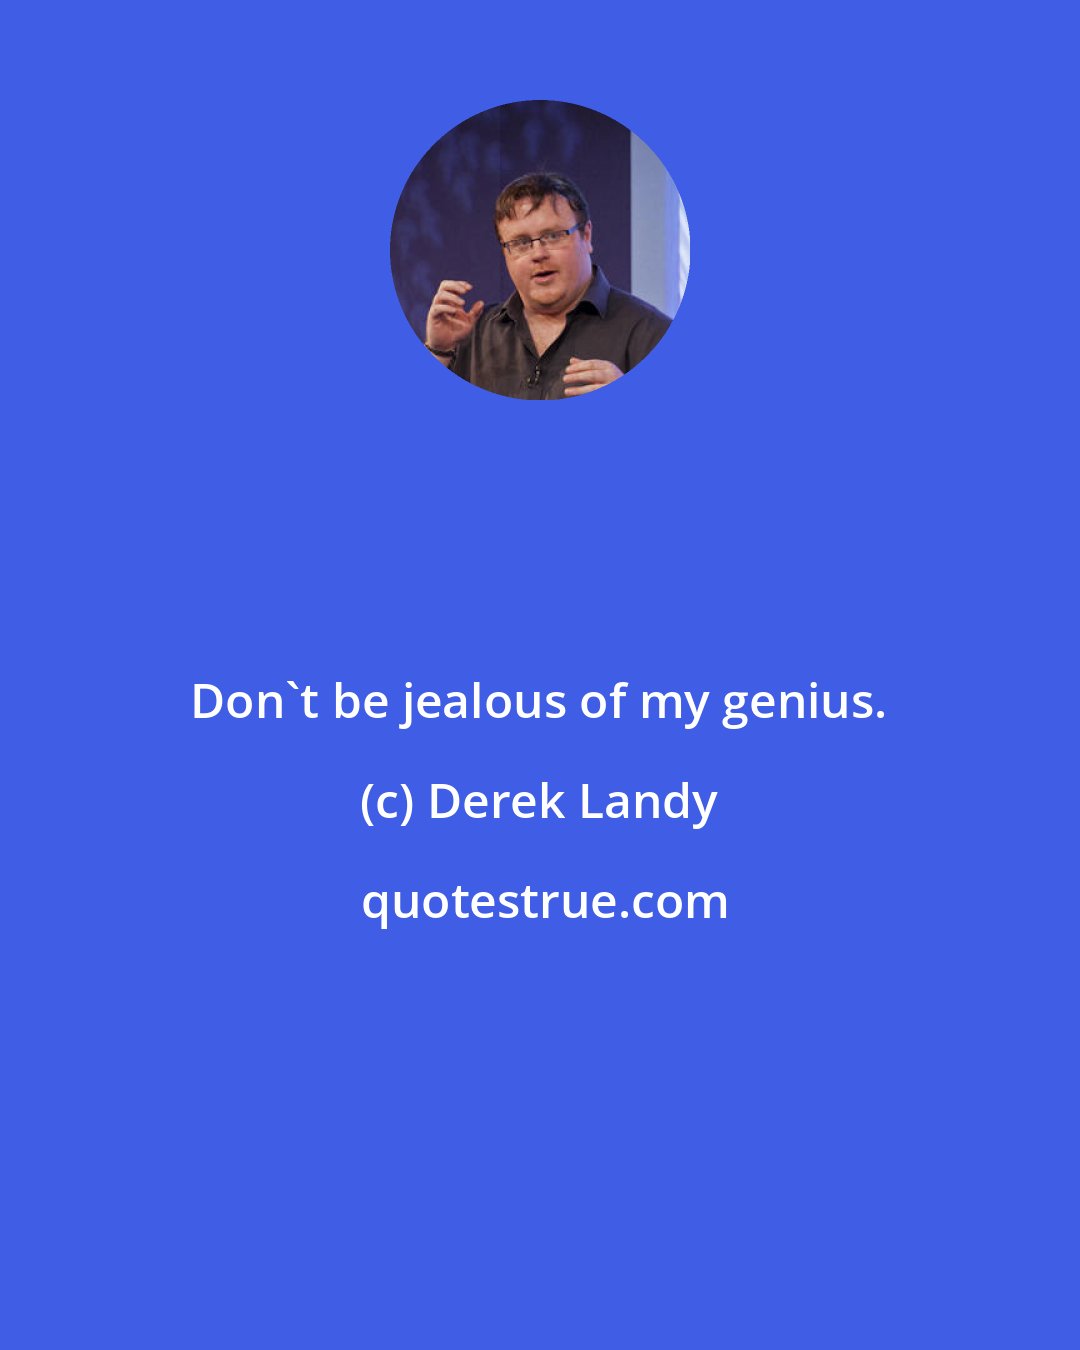 Derek Landy: Don't be jealous of my genius.